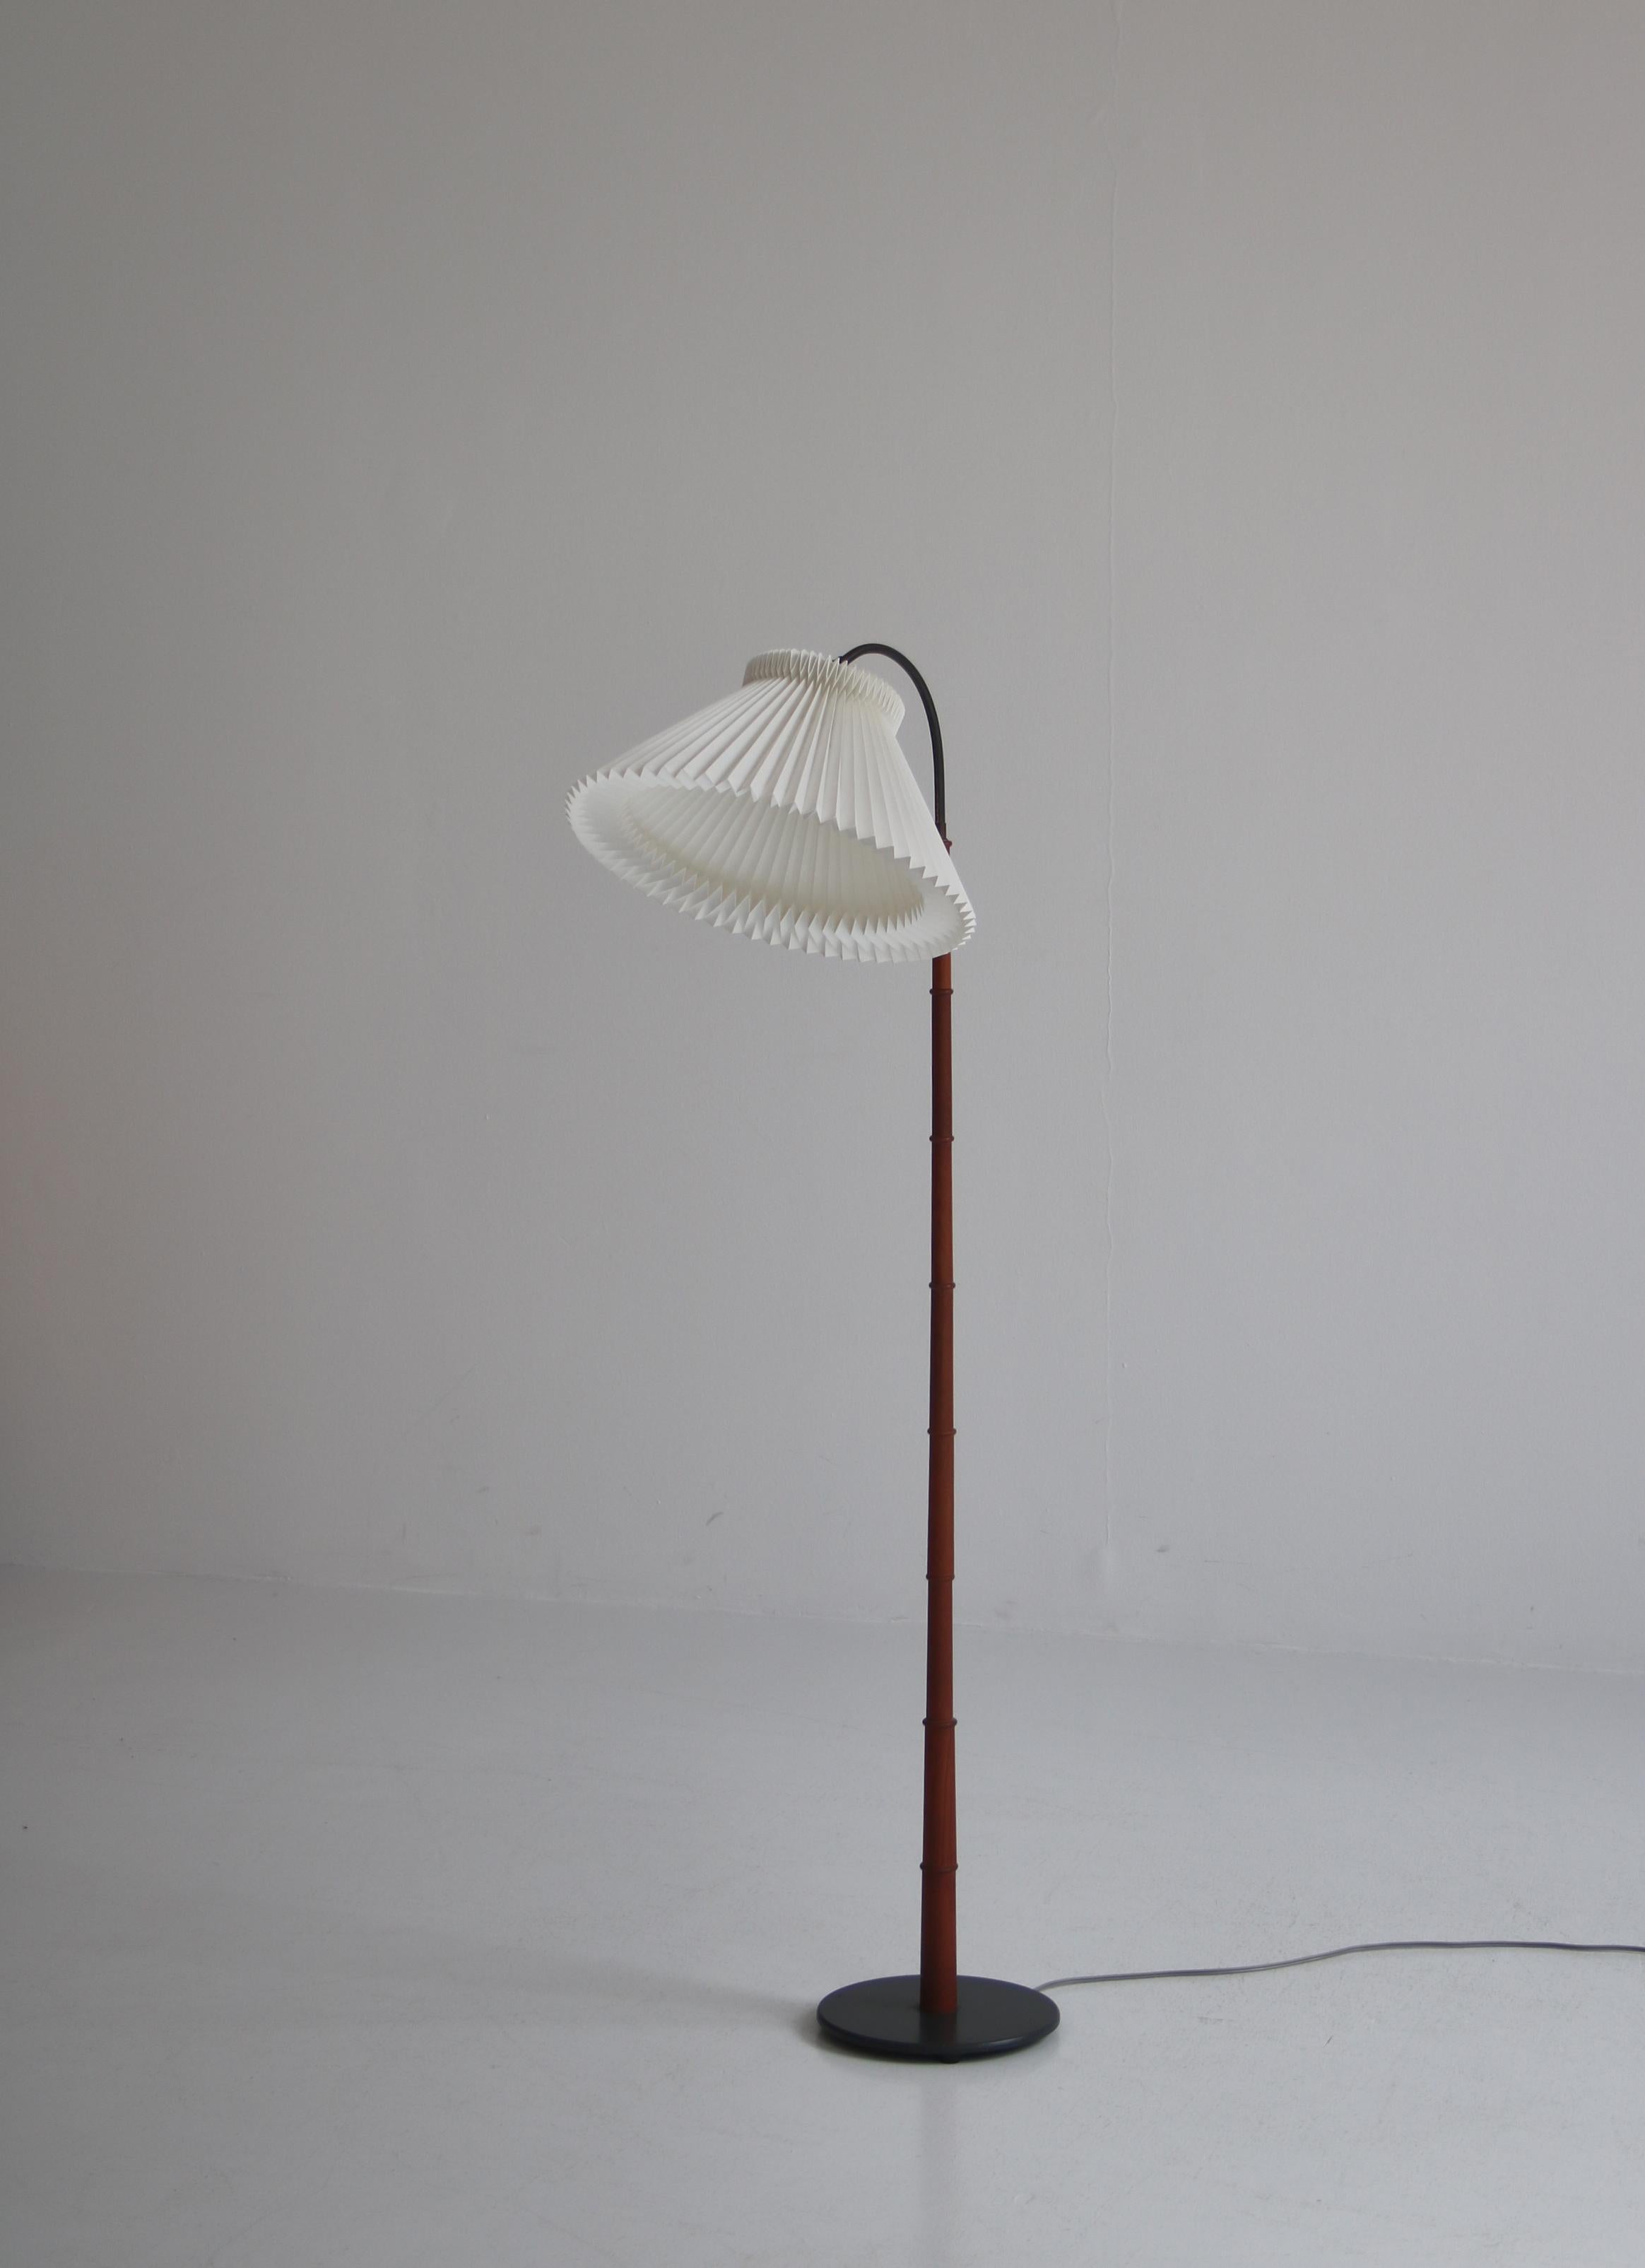 Danish Modern Floor Lamp in Teak with Hand Folded Le Klint Shade, 1950s For Sale 6